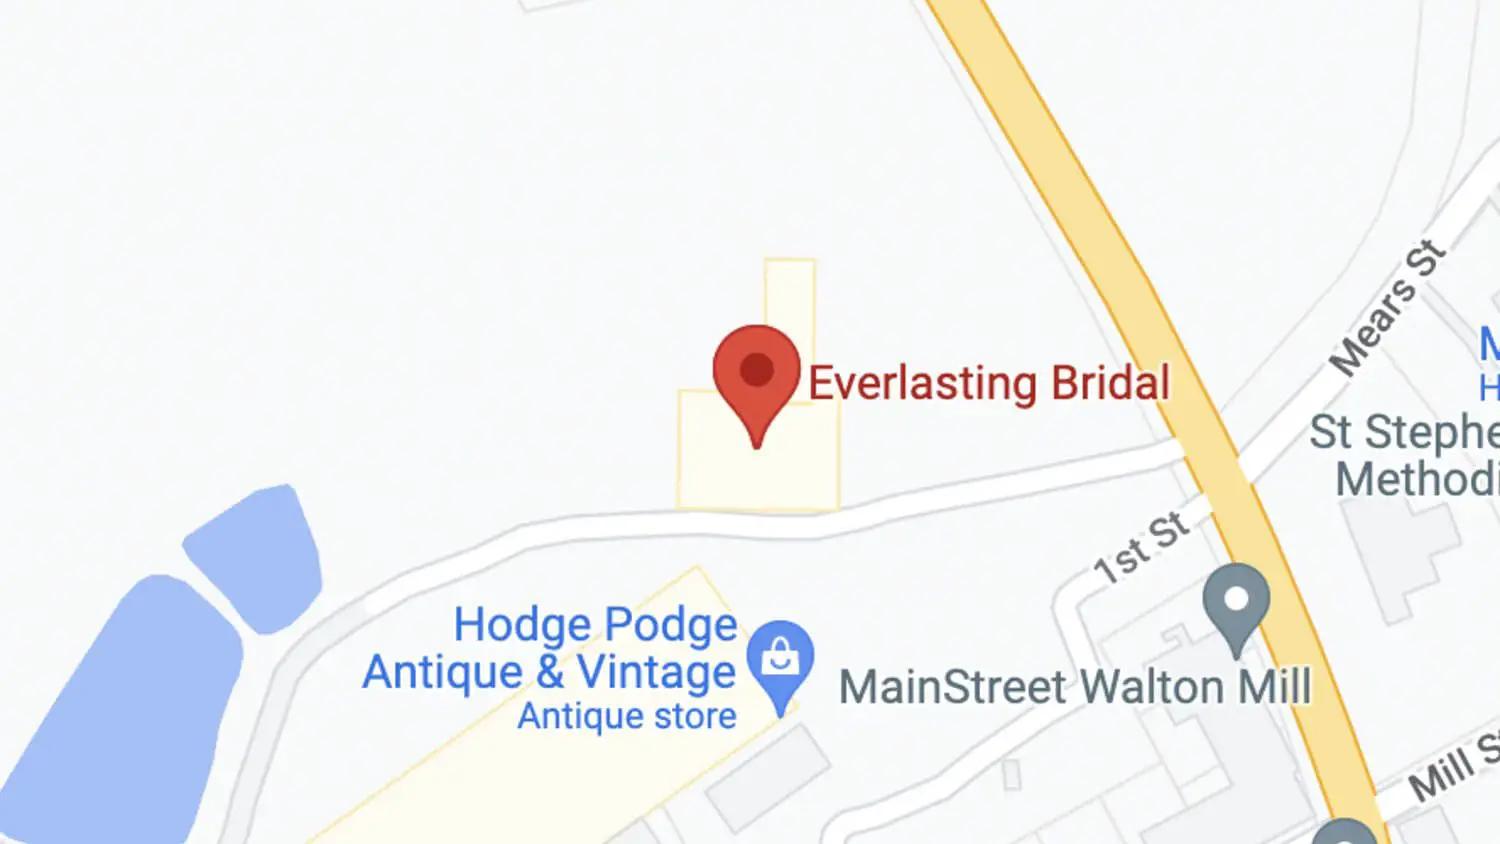 Everlasting Bridal location. Mobile image